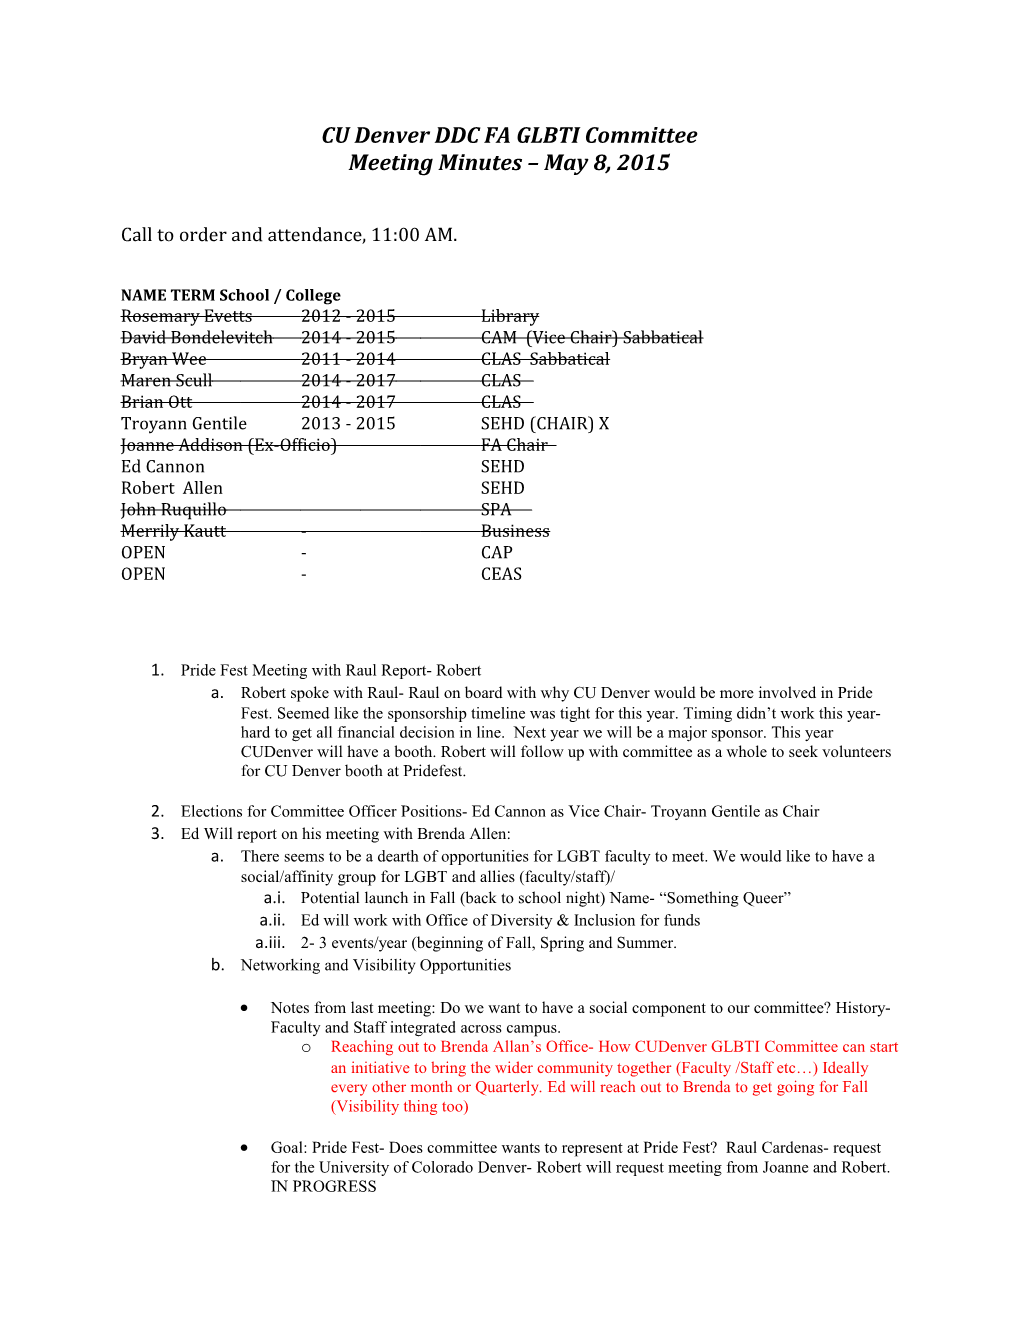 CU Denver GLBTI Committee May2015 Minutes